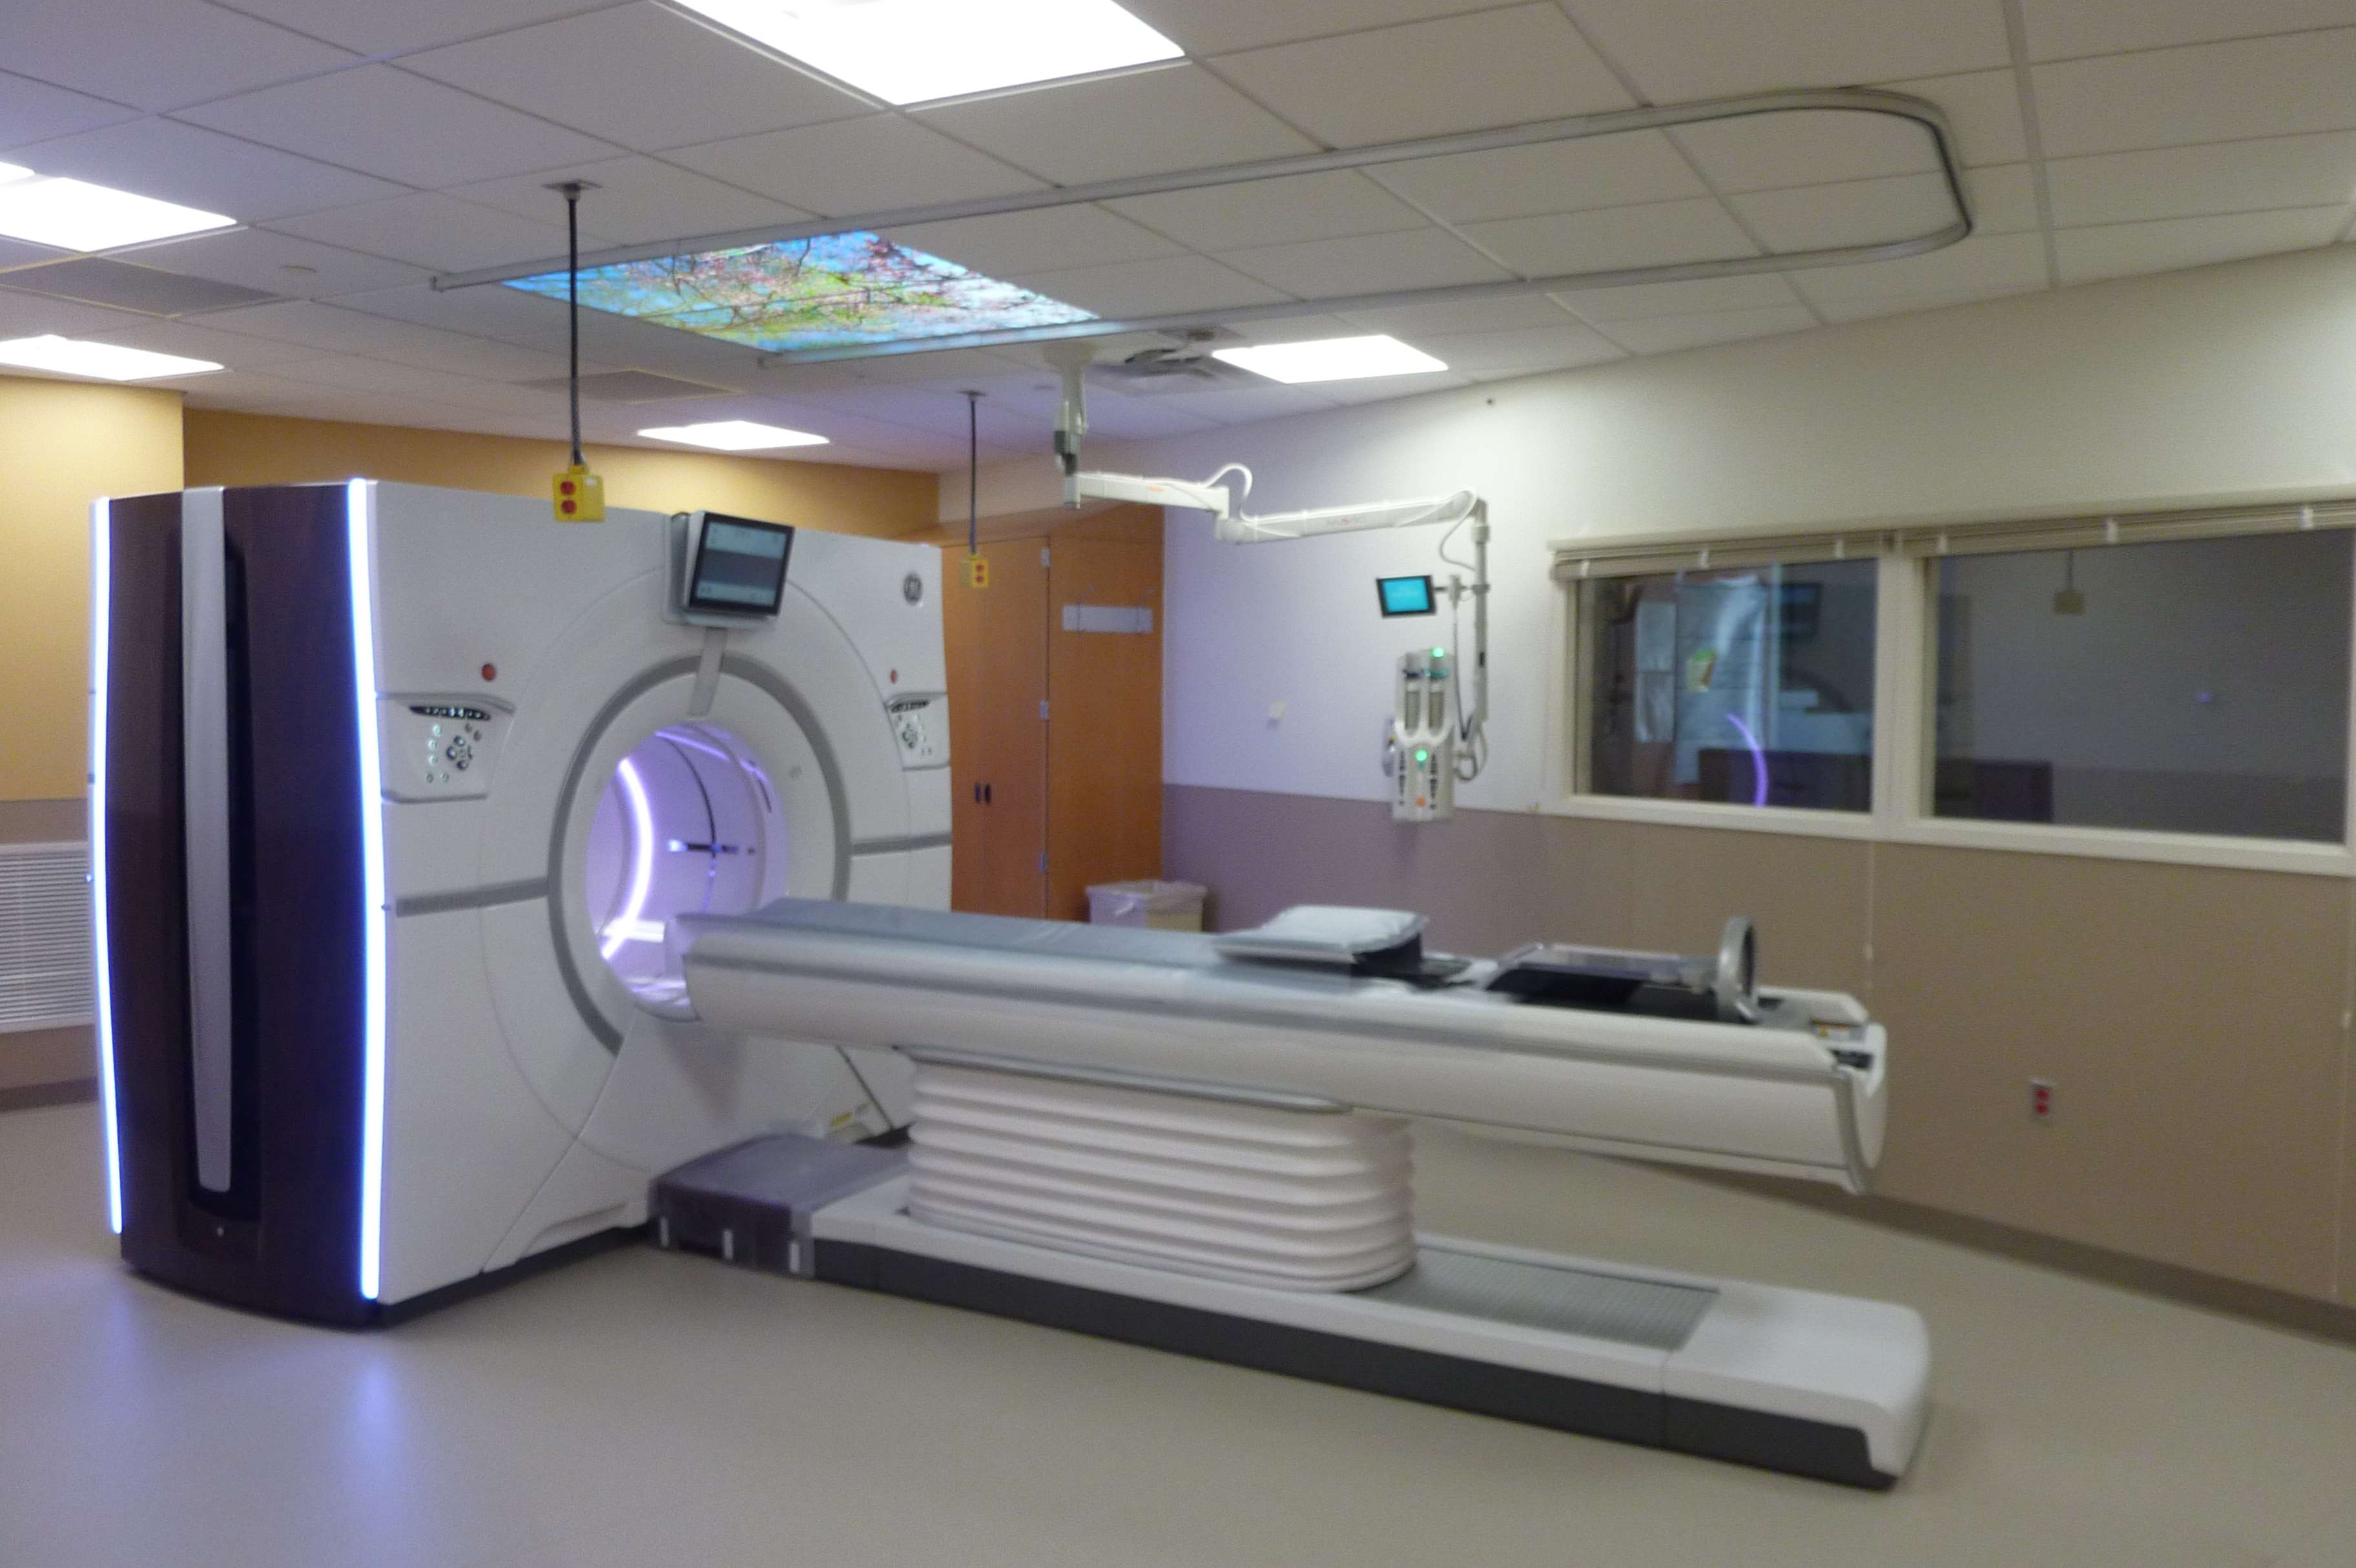 CT scan imaging equipment